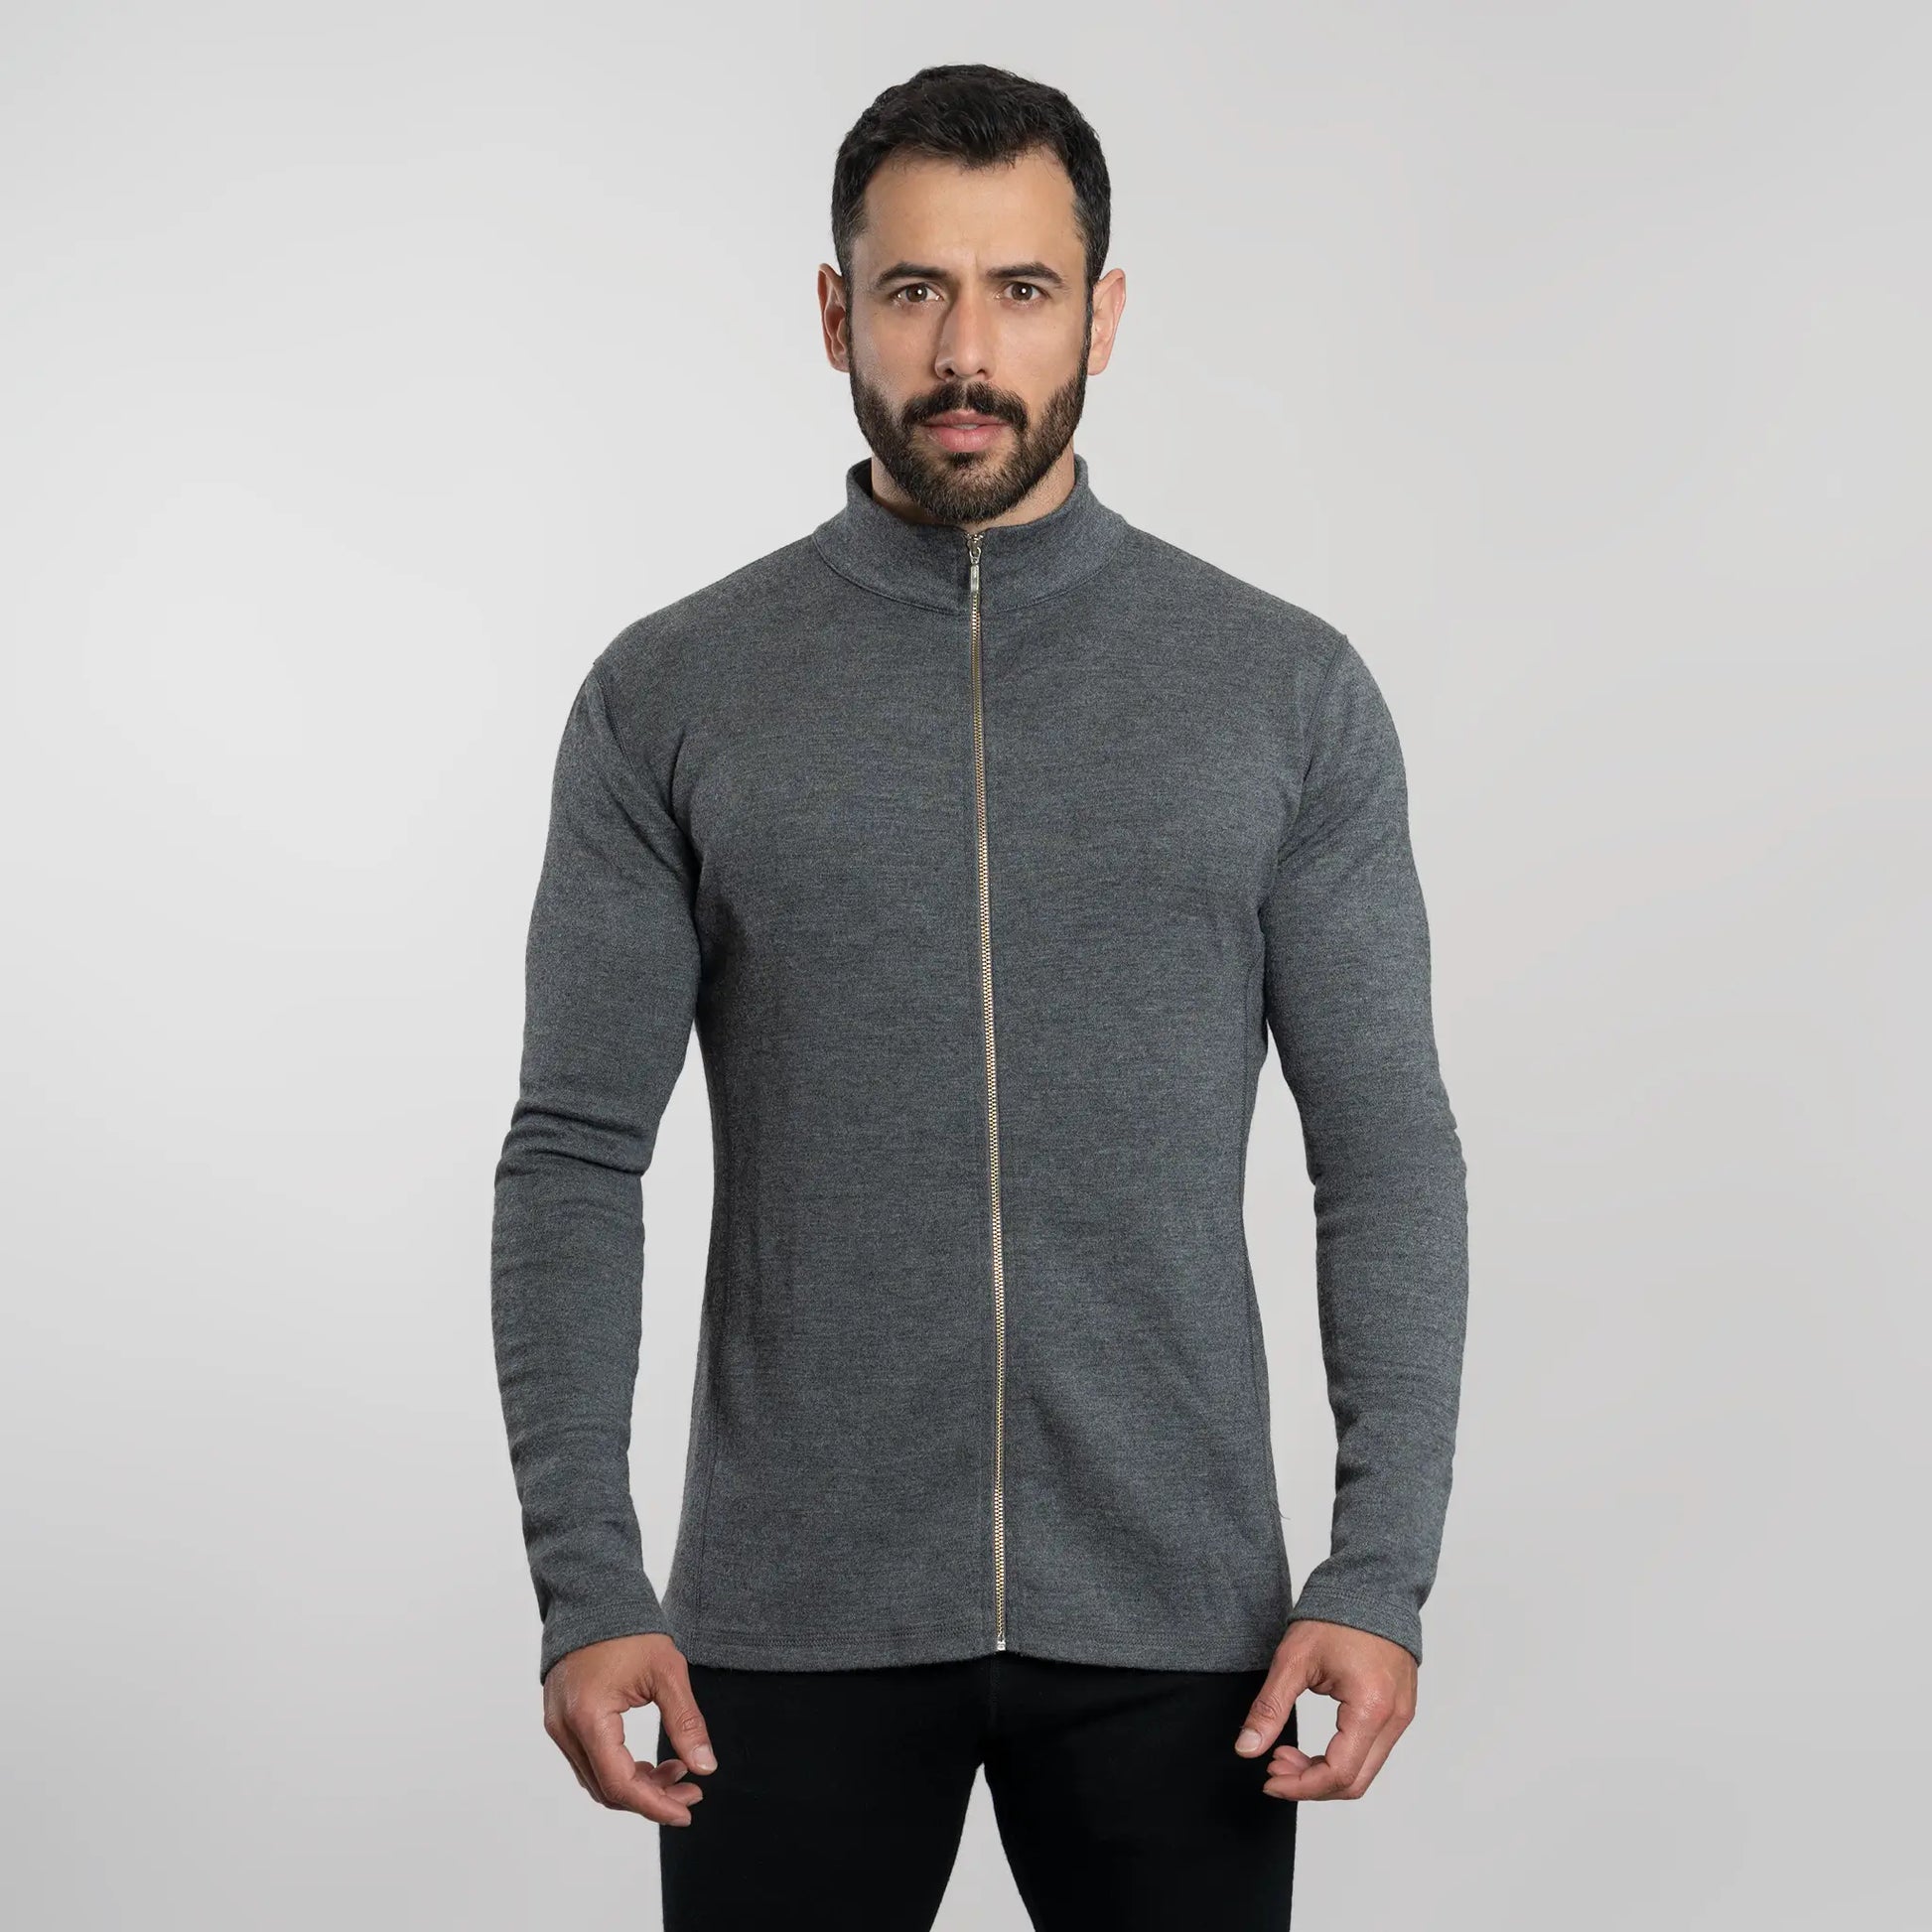 mens eco friendly jacket full zip color gray